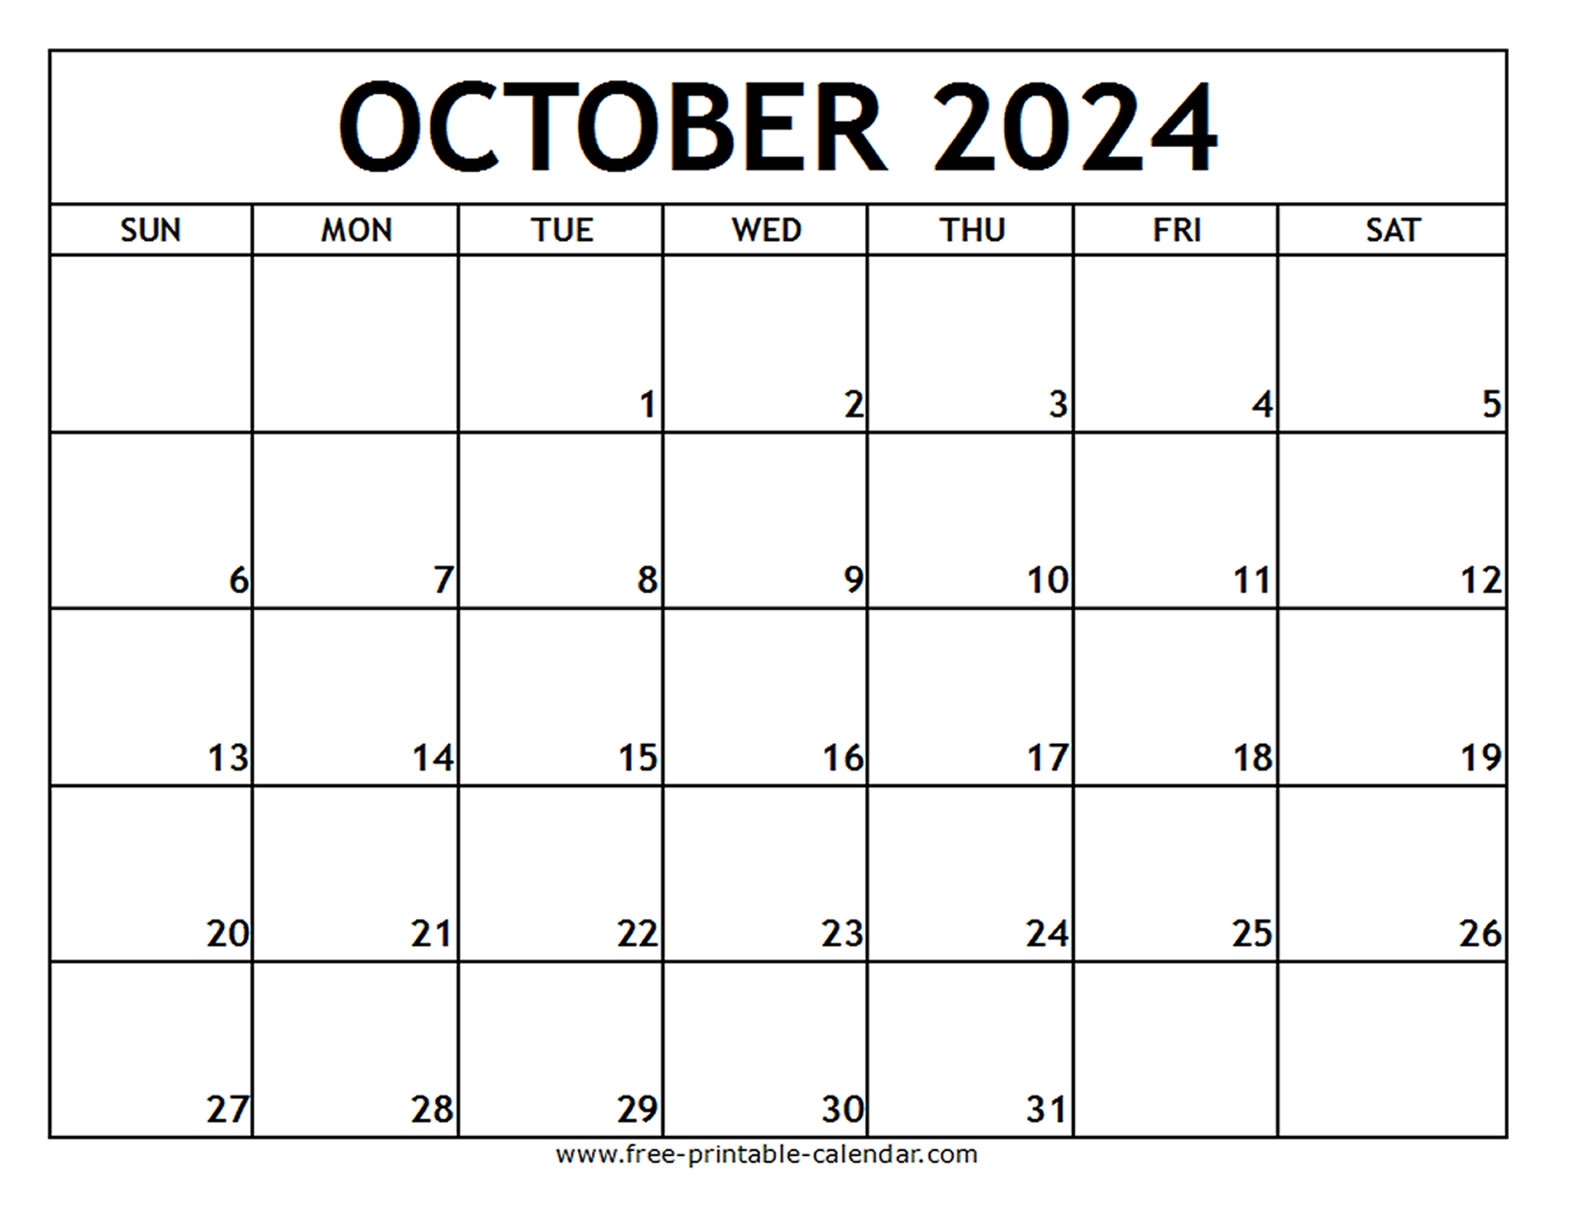 October 2024 Printable Calendar - Free-Printable-Calendar with Free Printable Blank October Calendar 2024